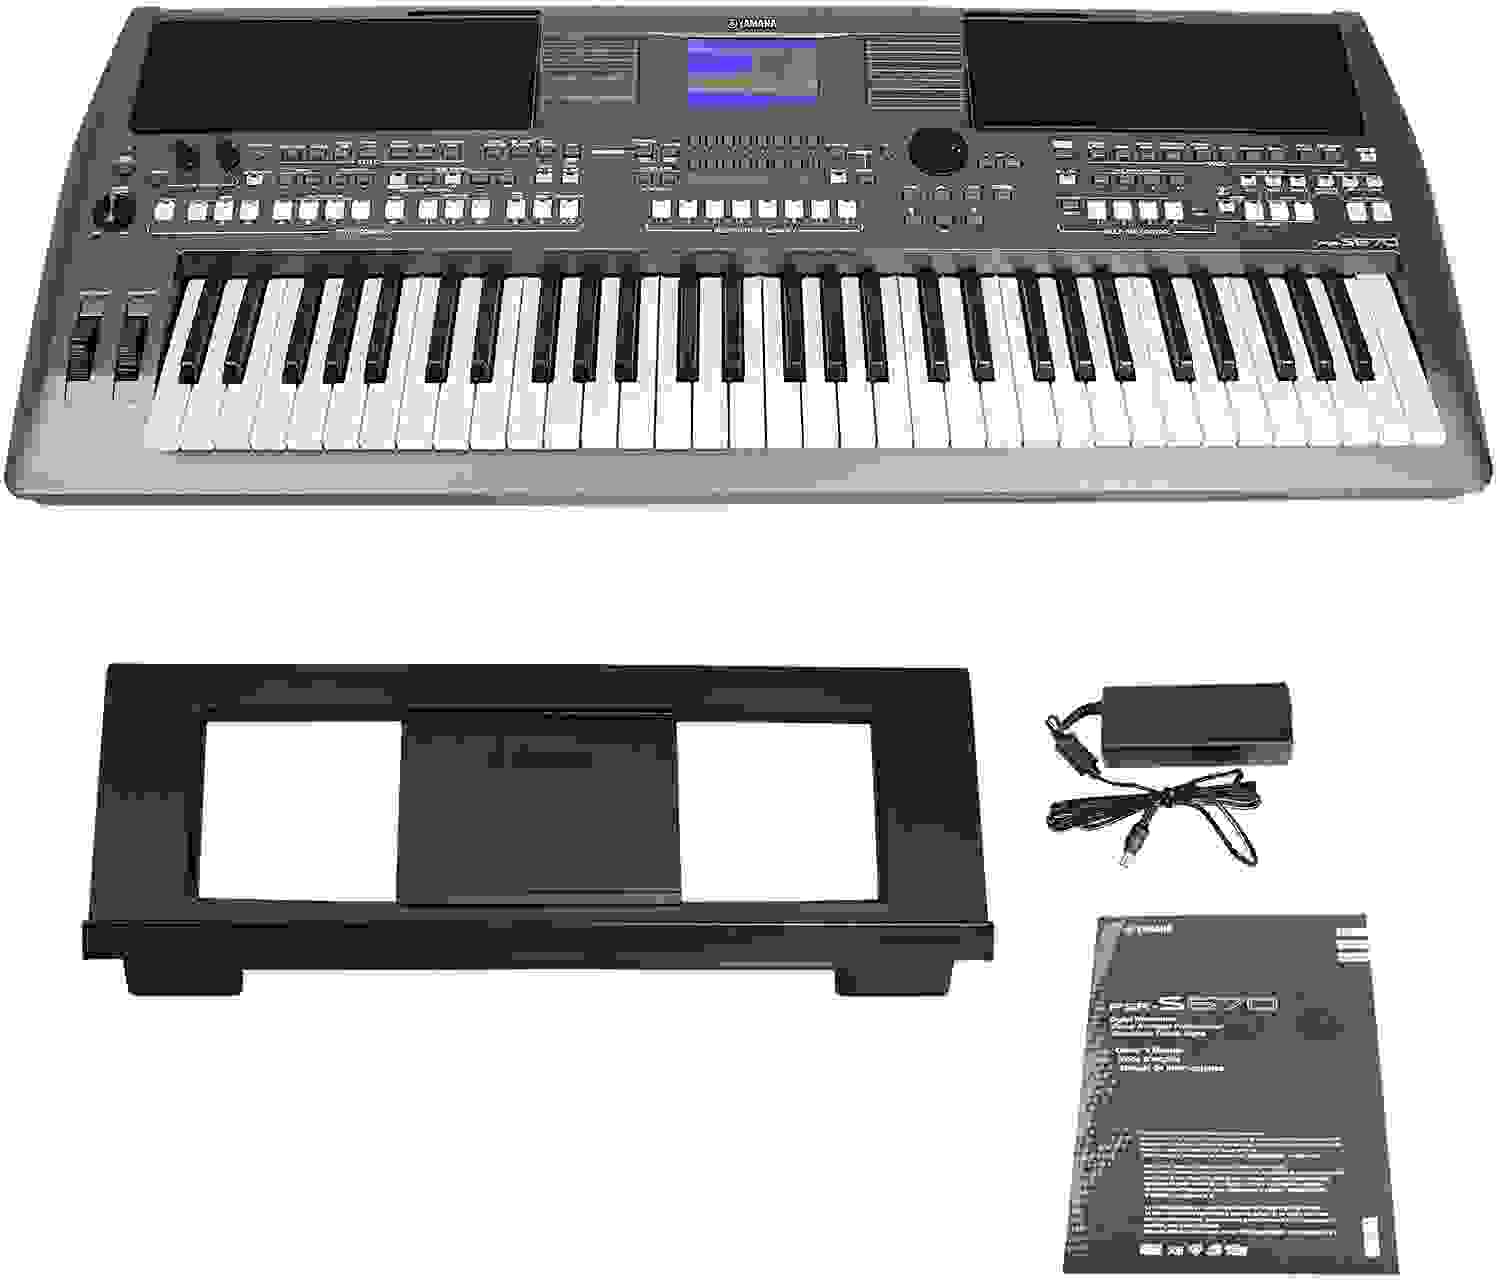 YAMAHA PSR-S670 Portable Arranger 61-Key Electronic Keyboard